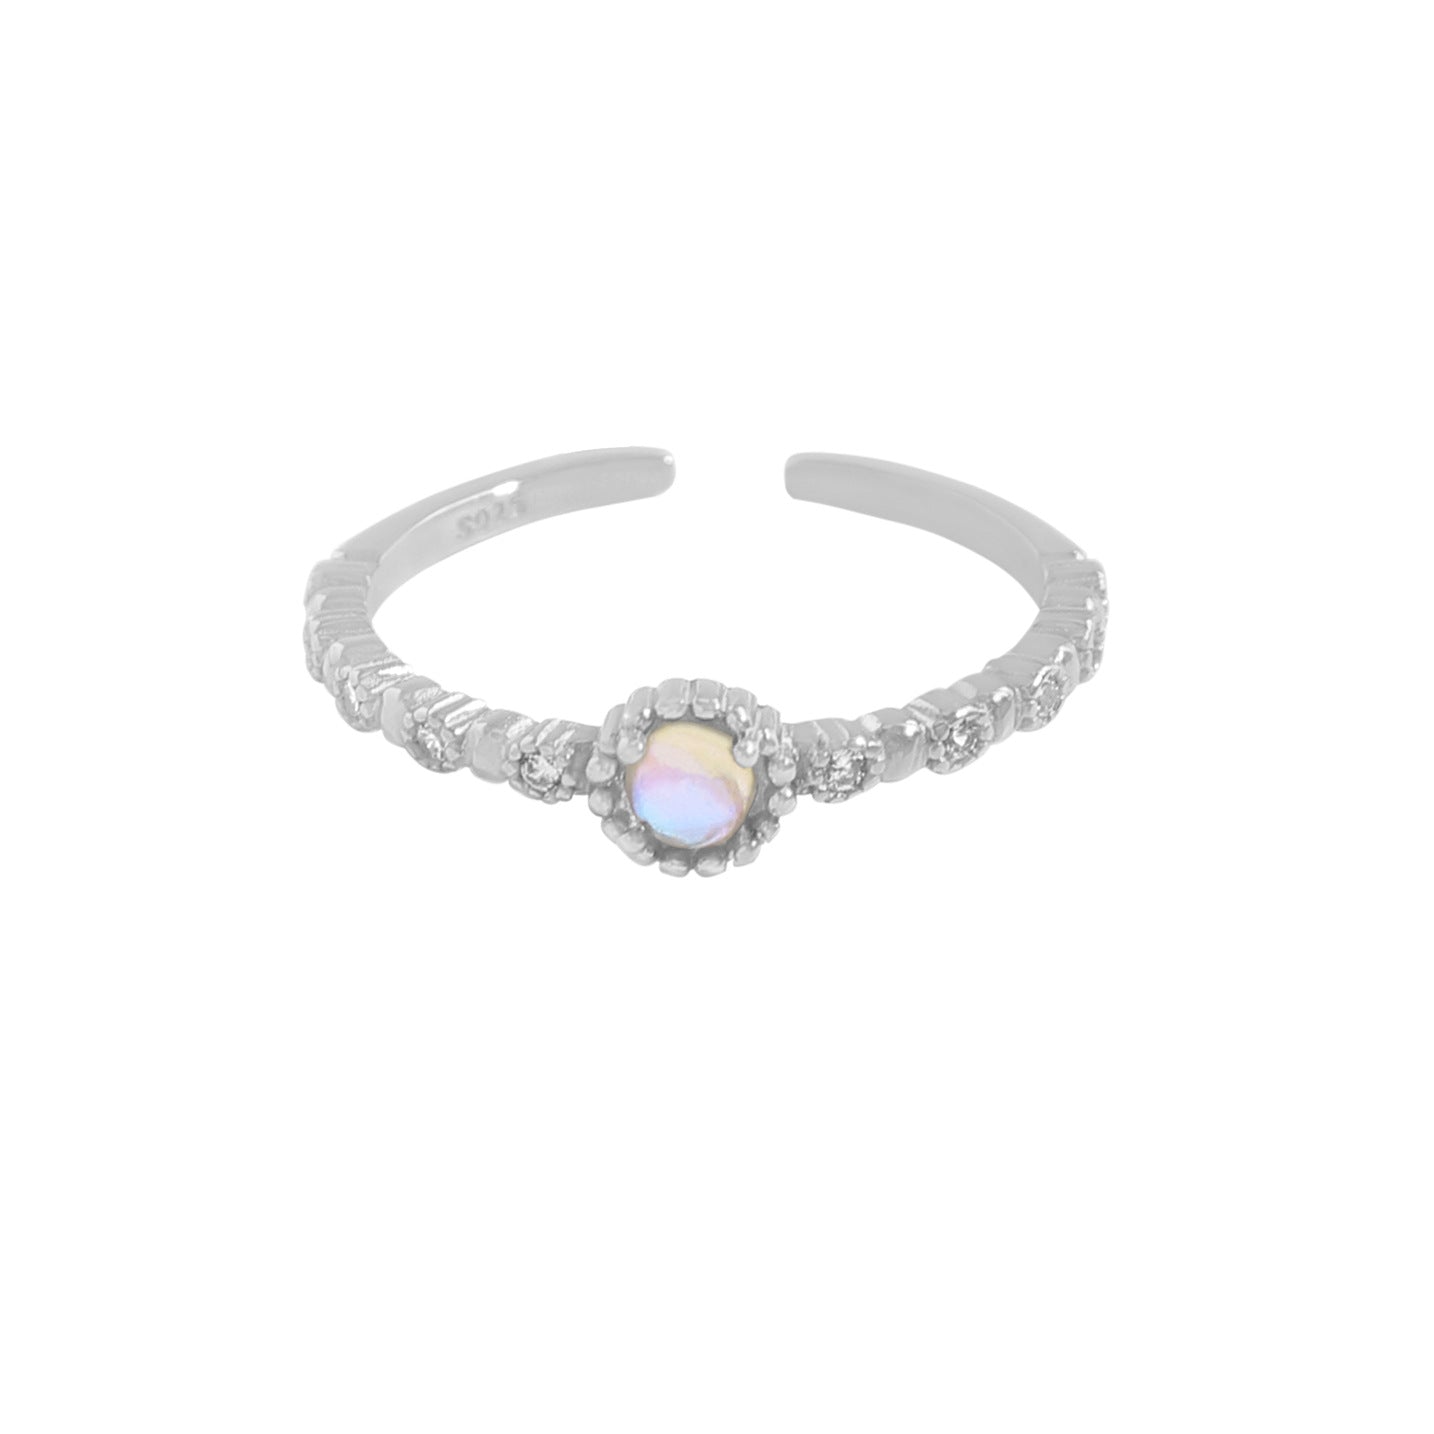 zircon moonstone open ring sterling silver S925 female fashion jewelry